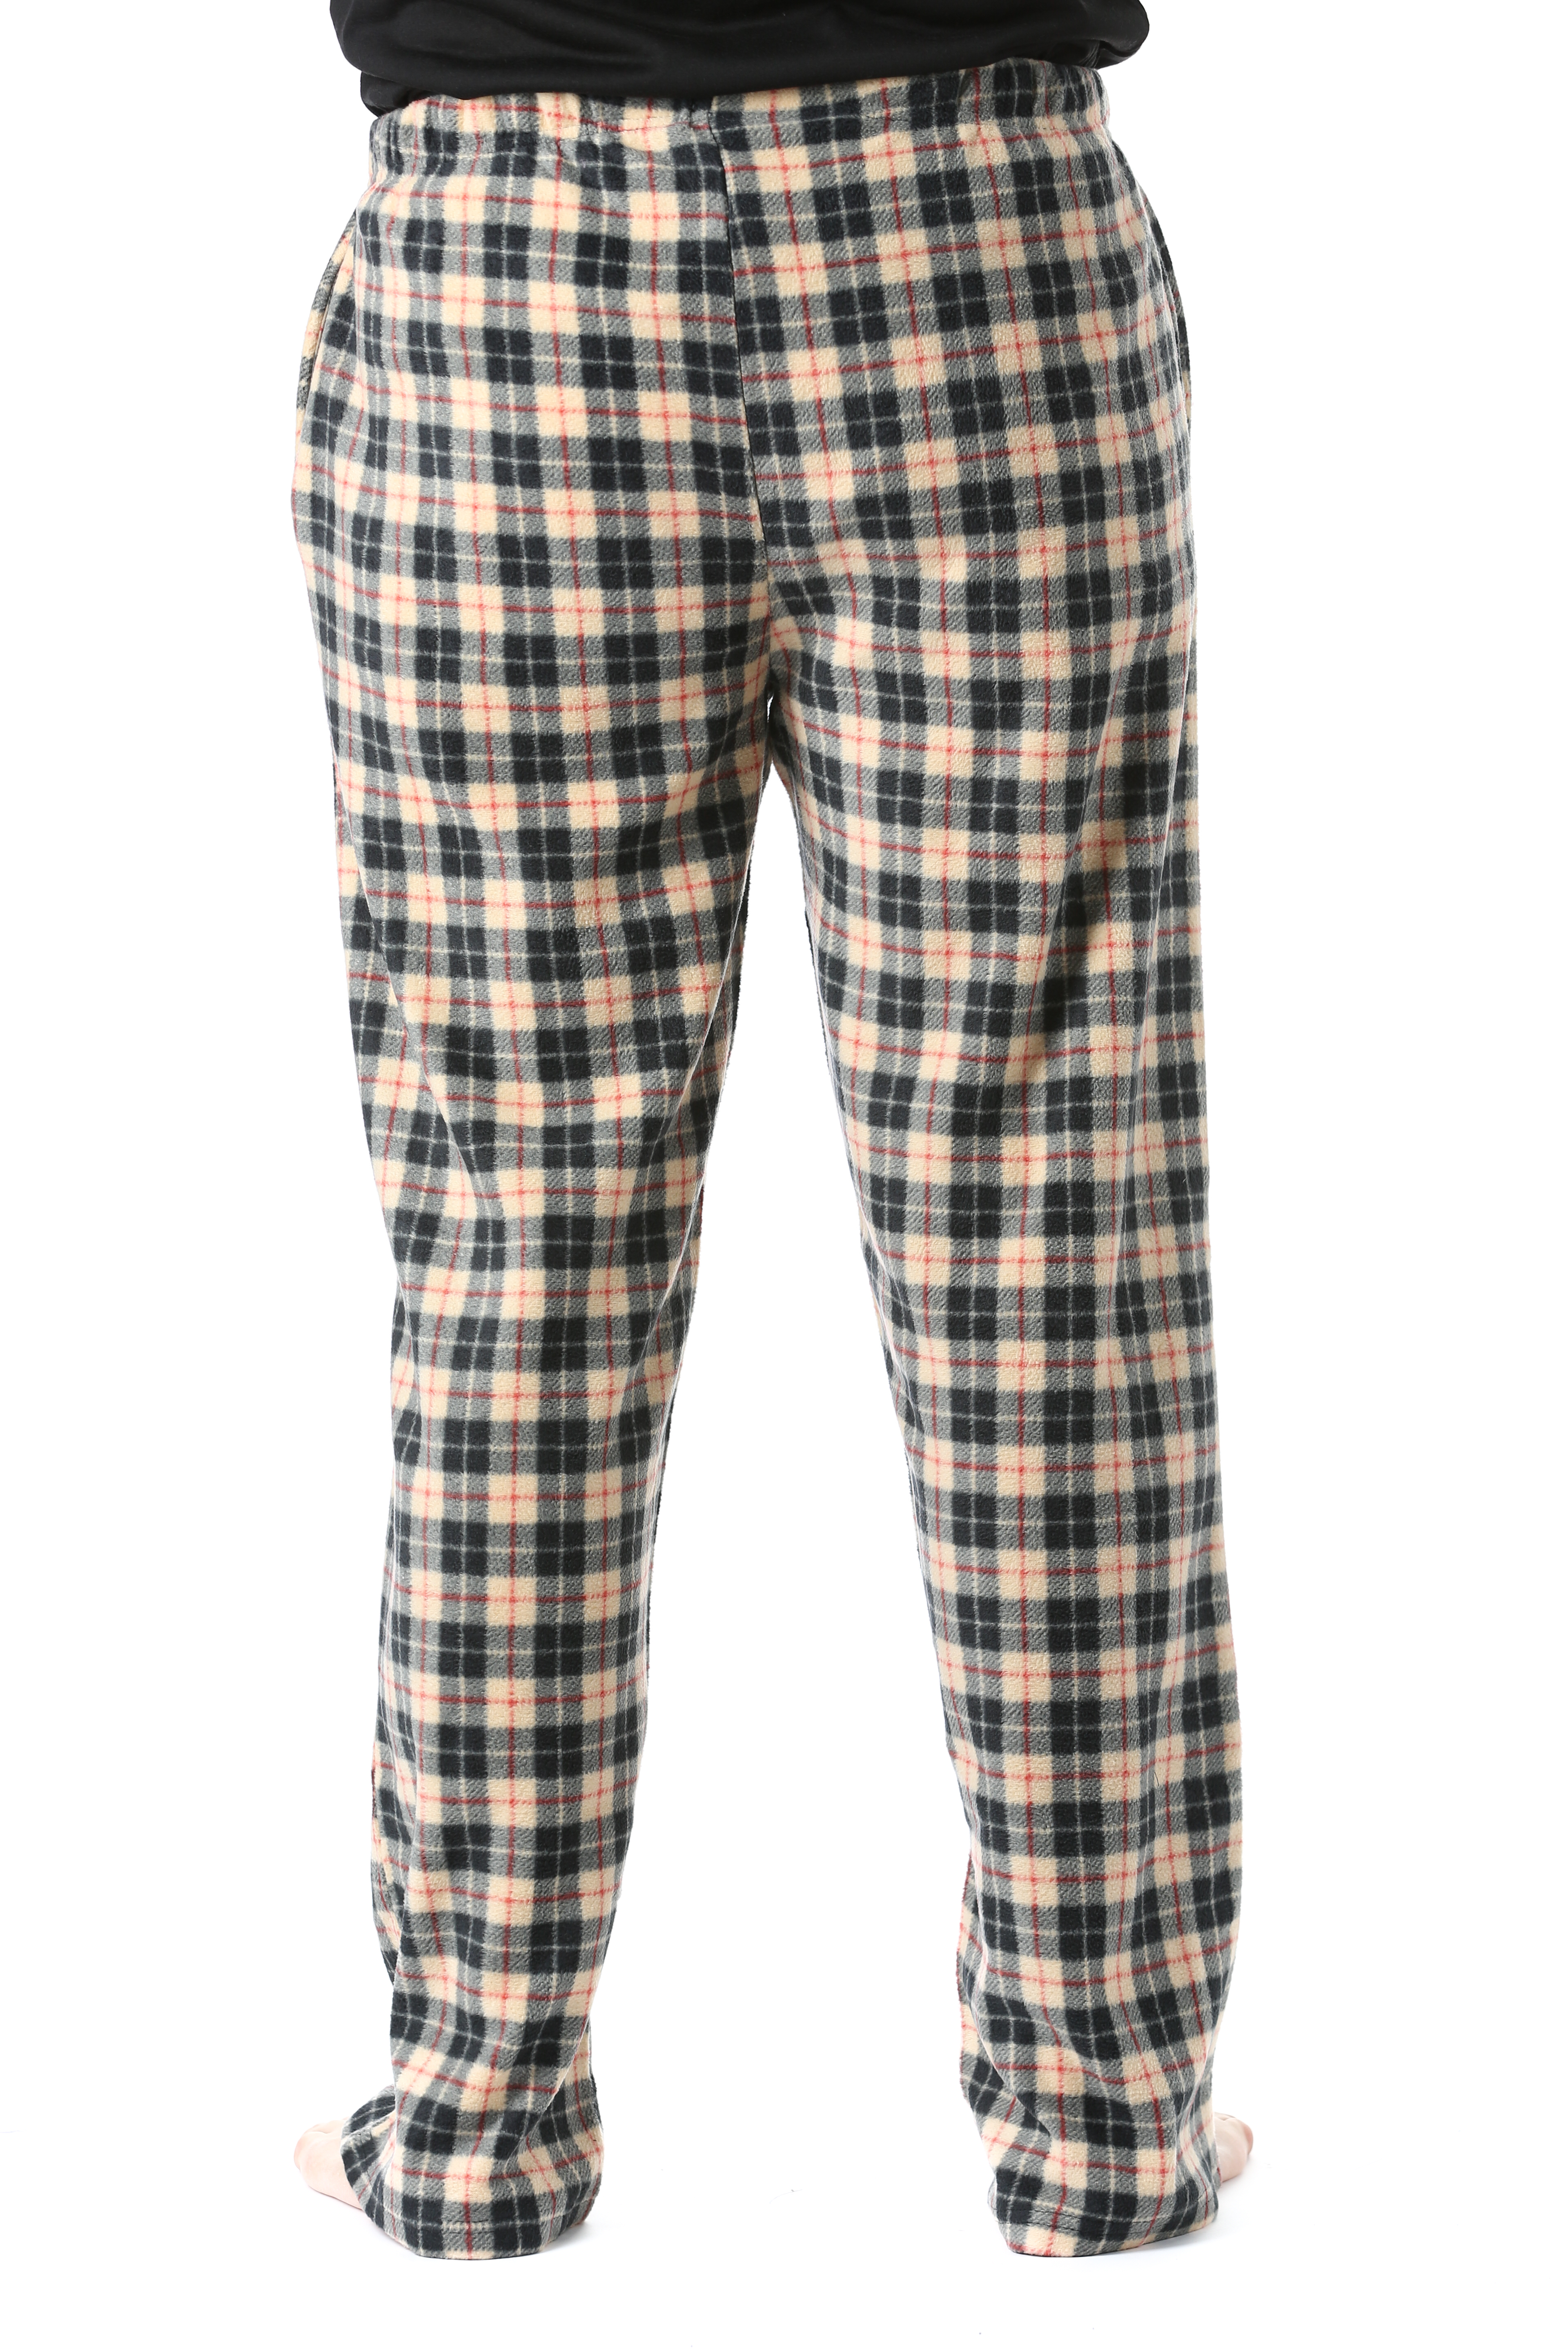 #FollowMe Microfleece Mens Pajama Pants with Pockets | eBay